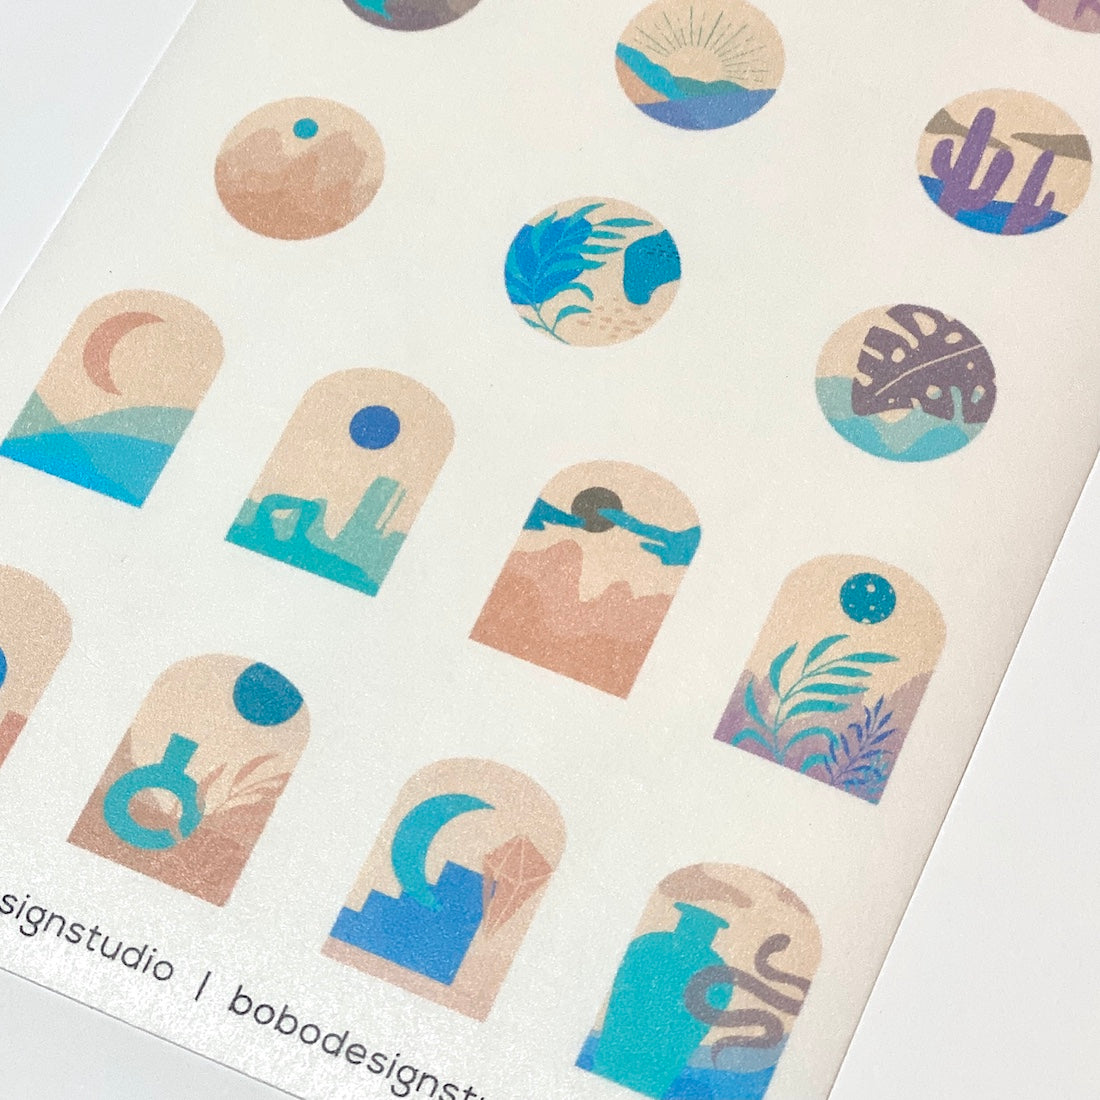 Washi Sticker Sheet in Desert Cool features fun desert scenes perfect for your journal or Wanderlust Passport